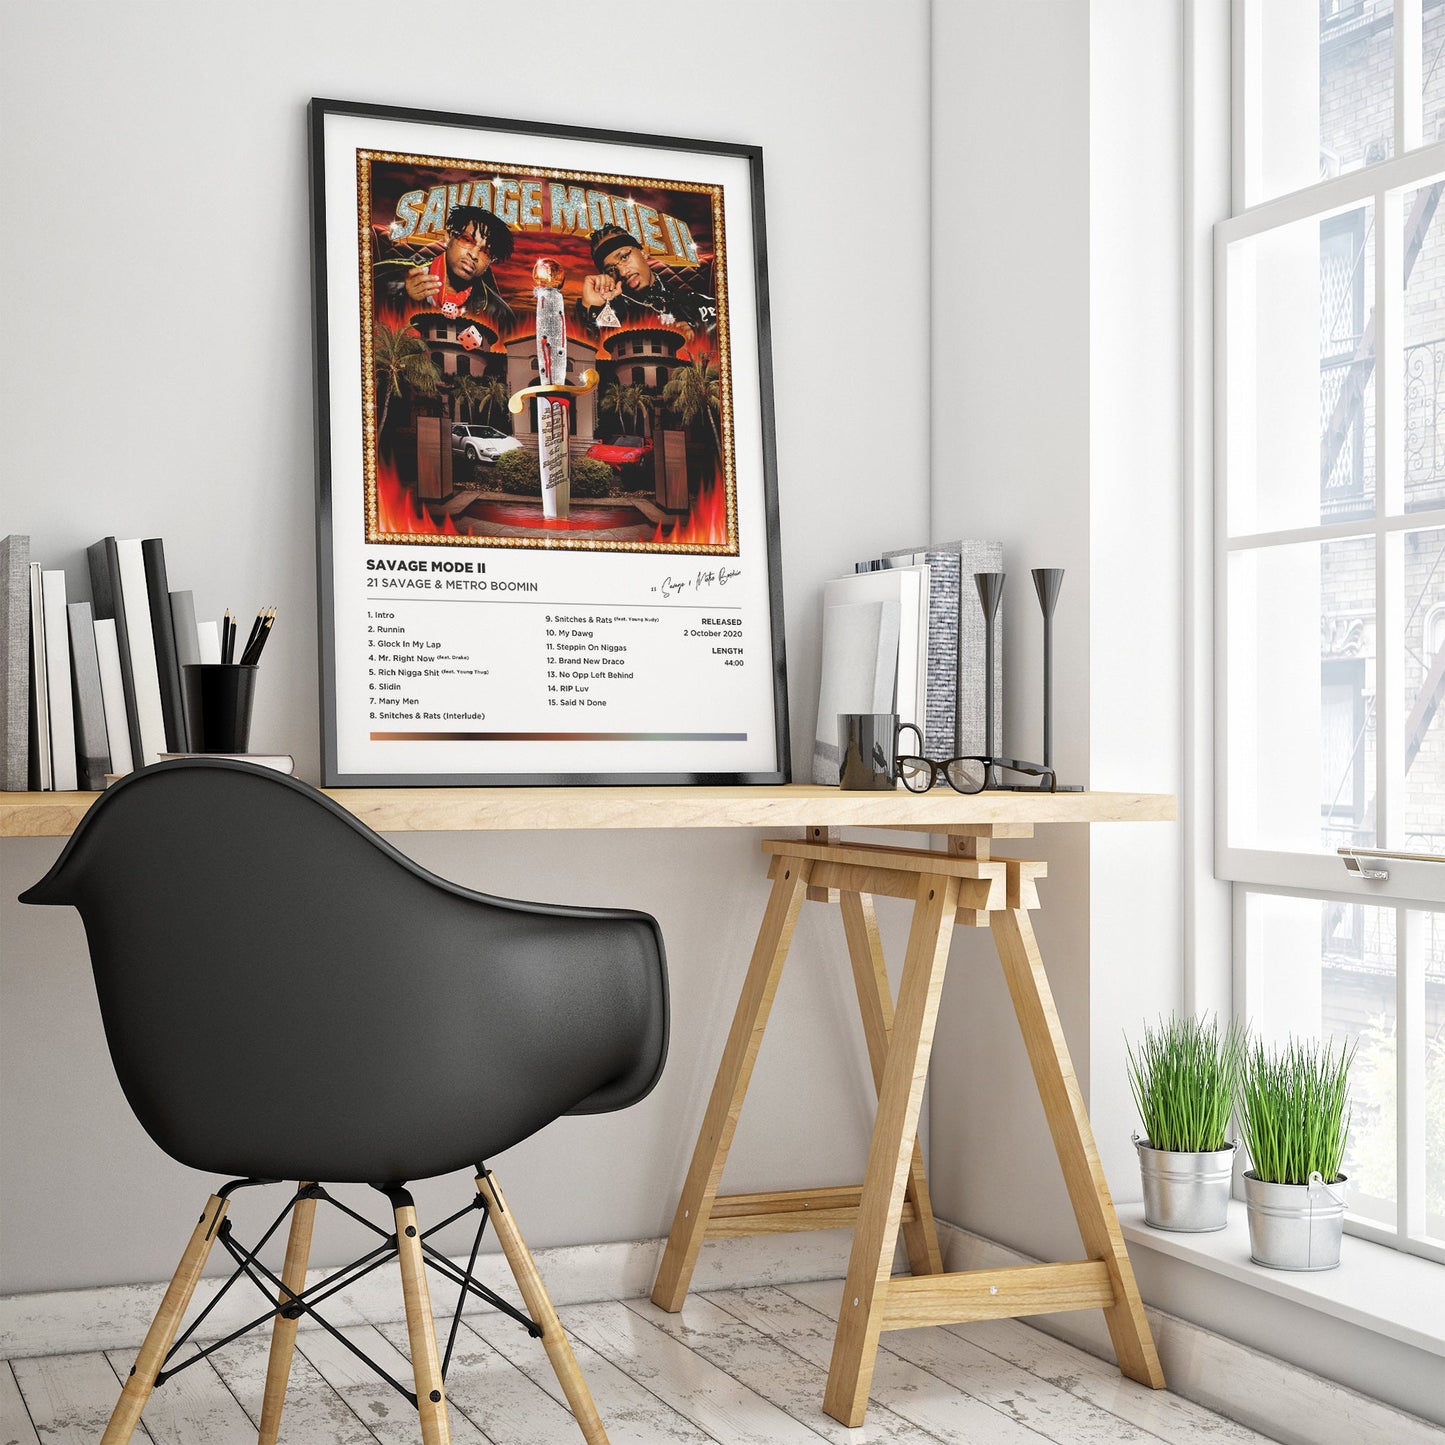 21 Savage & Metro Boomin - SAVAGE MODE II Framed Poster Print | Polaroid Style | Album Cover Artwork